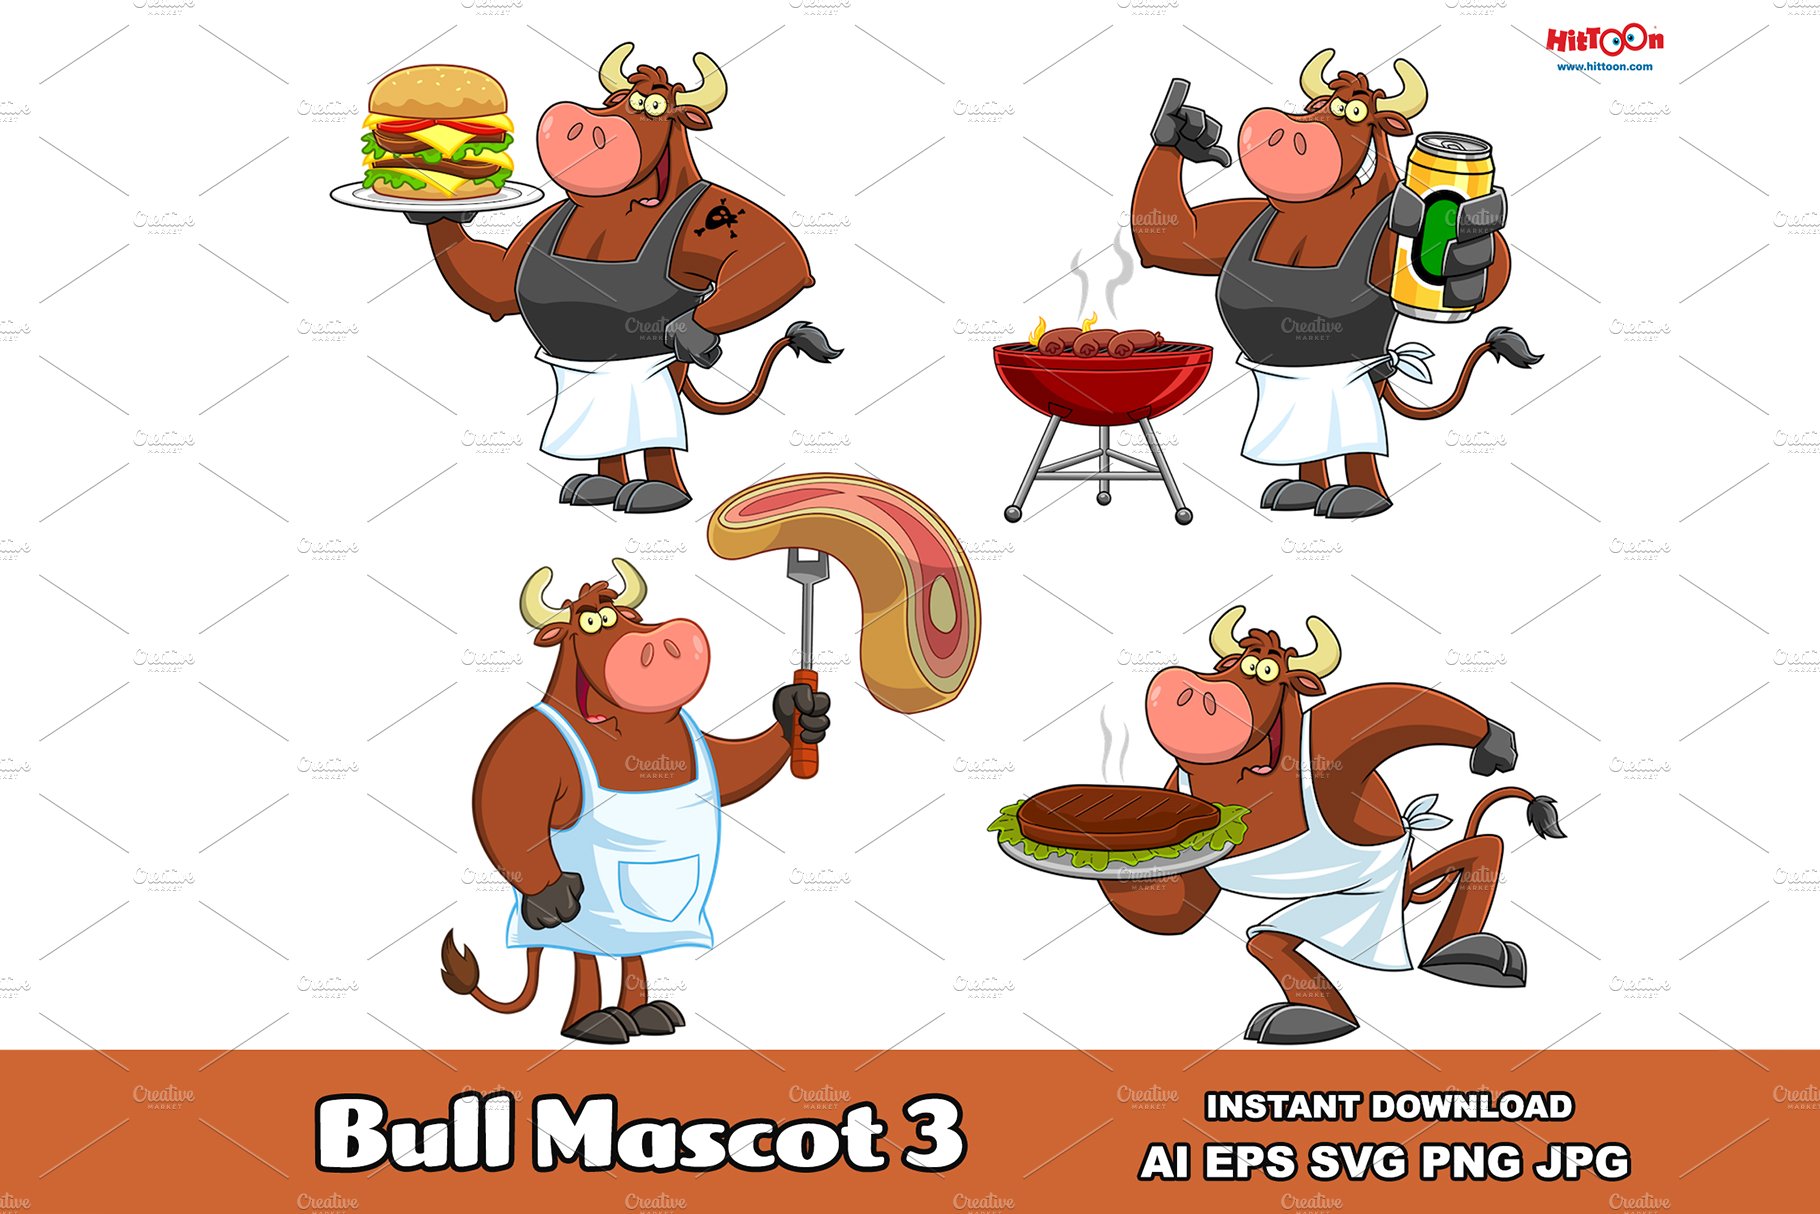 Bull Cartoon Mascot Character 3 cover image.